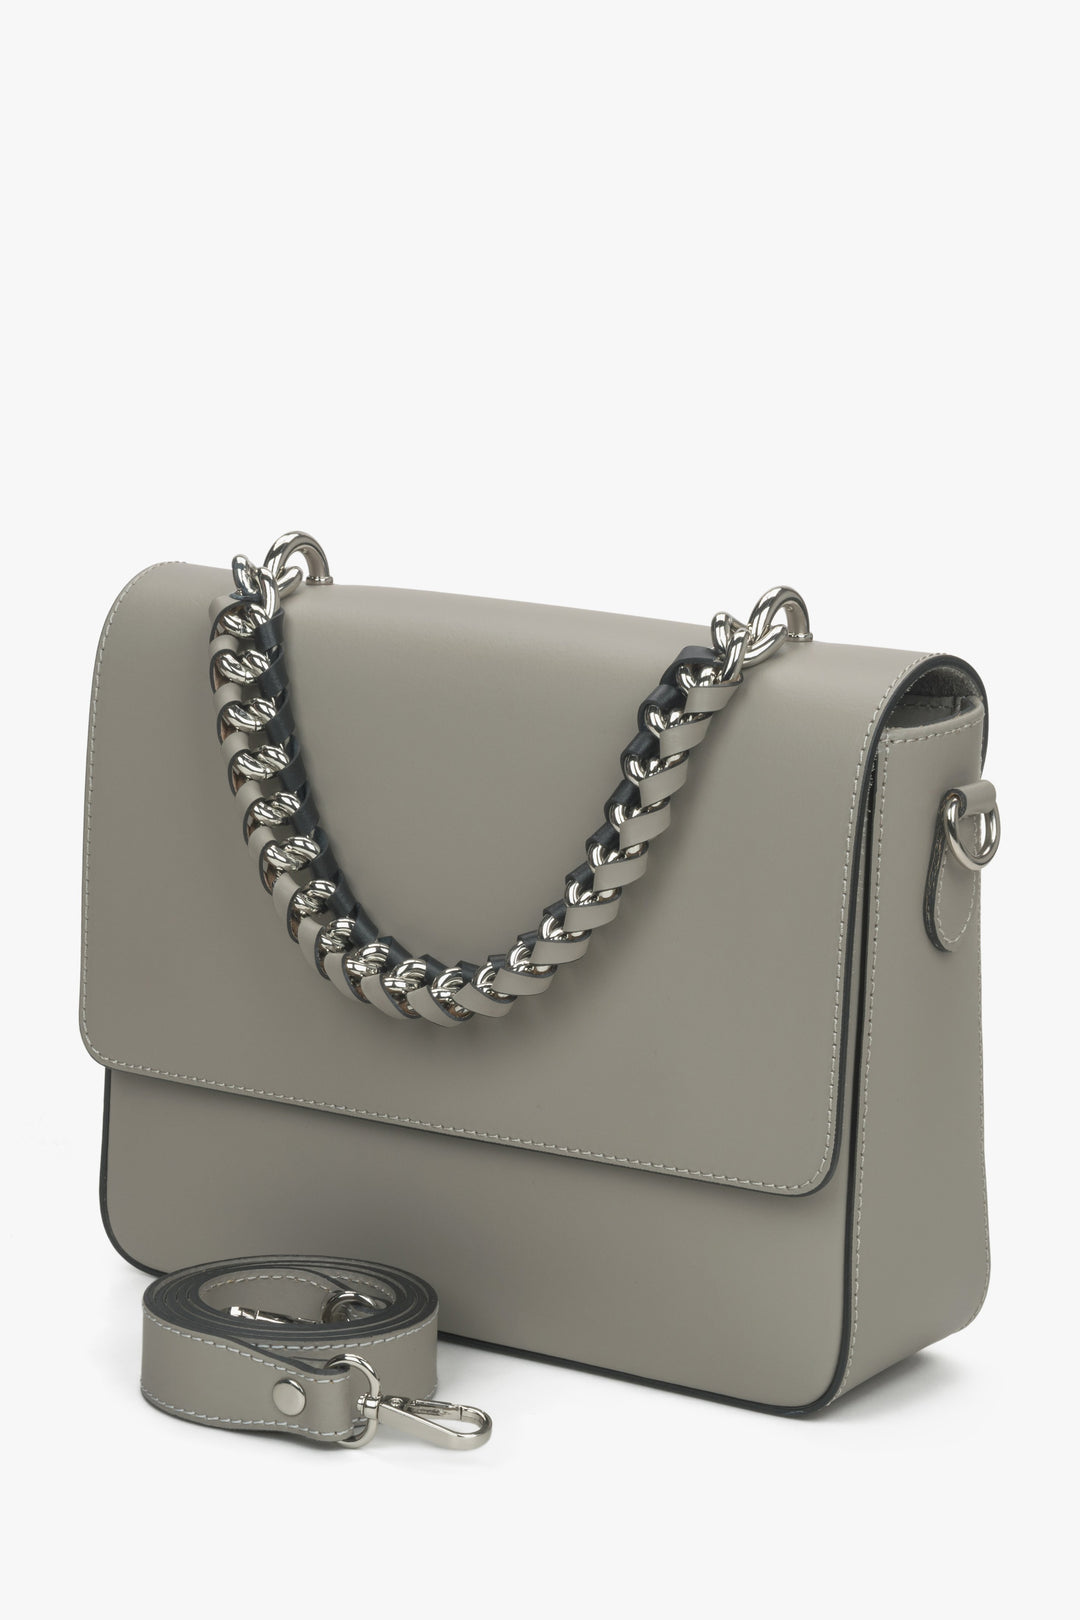 Estro women's grey shoulder bag with a chain strap.